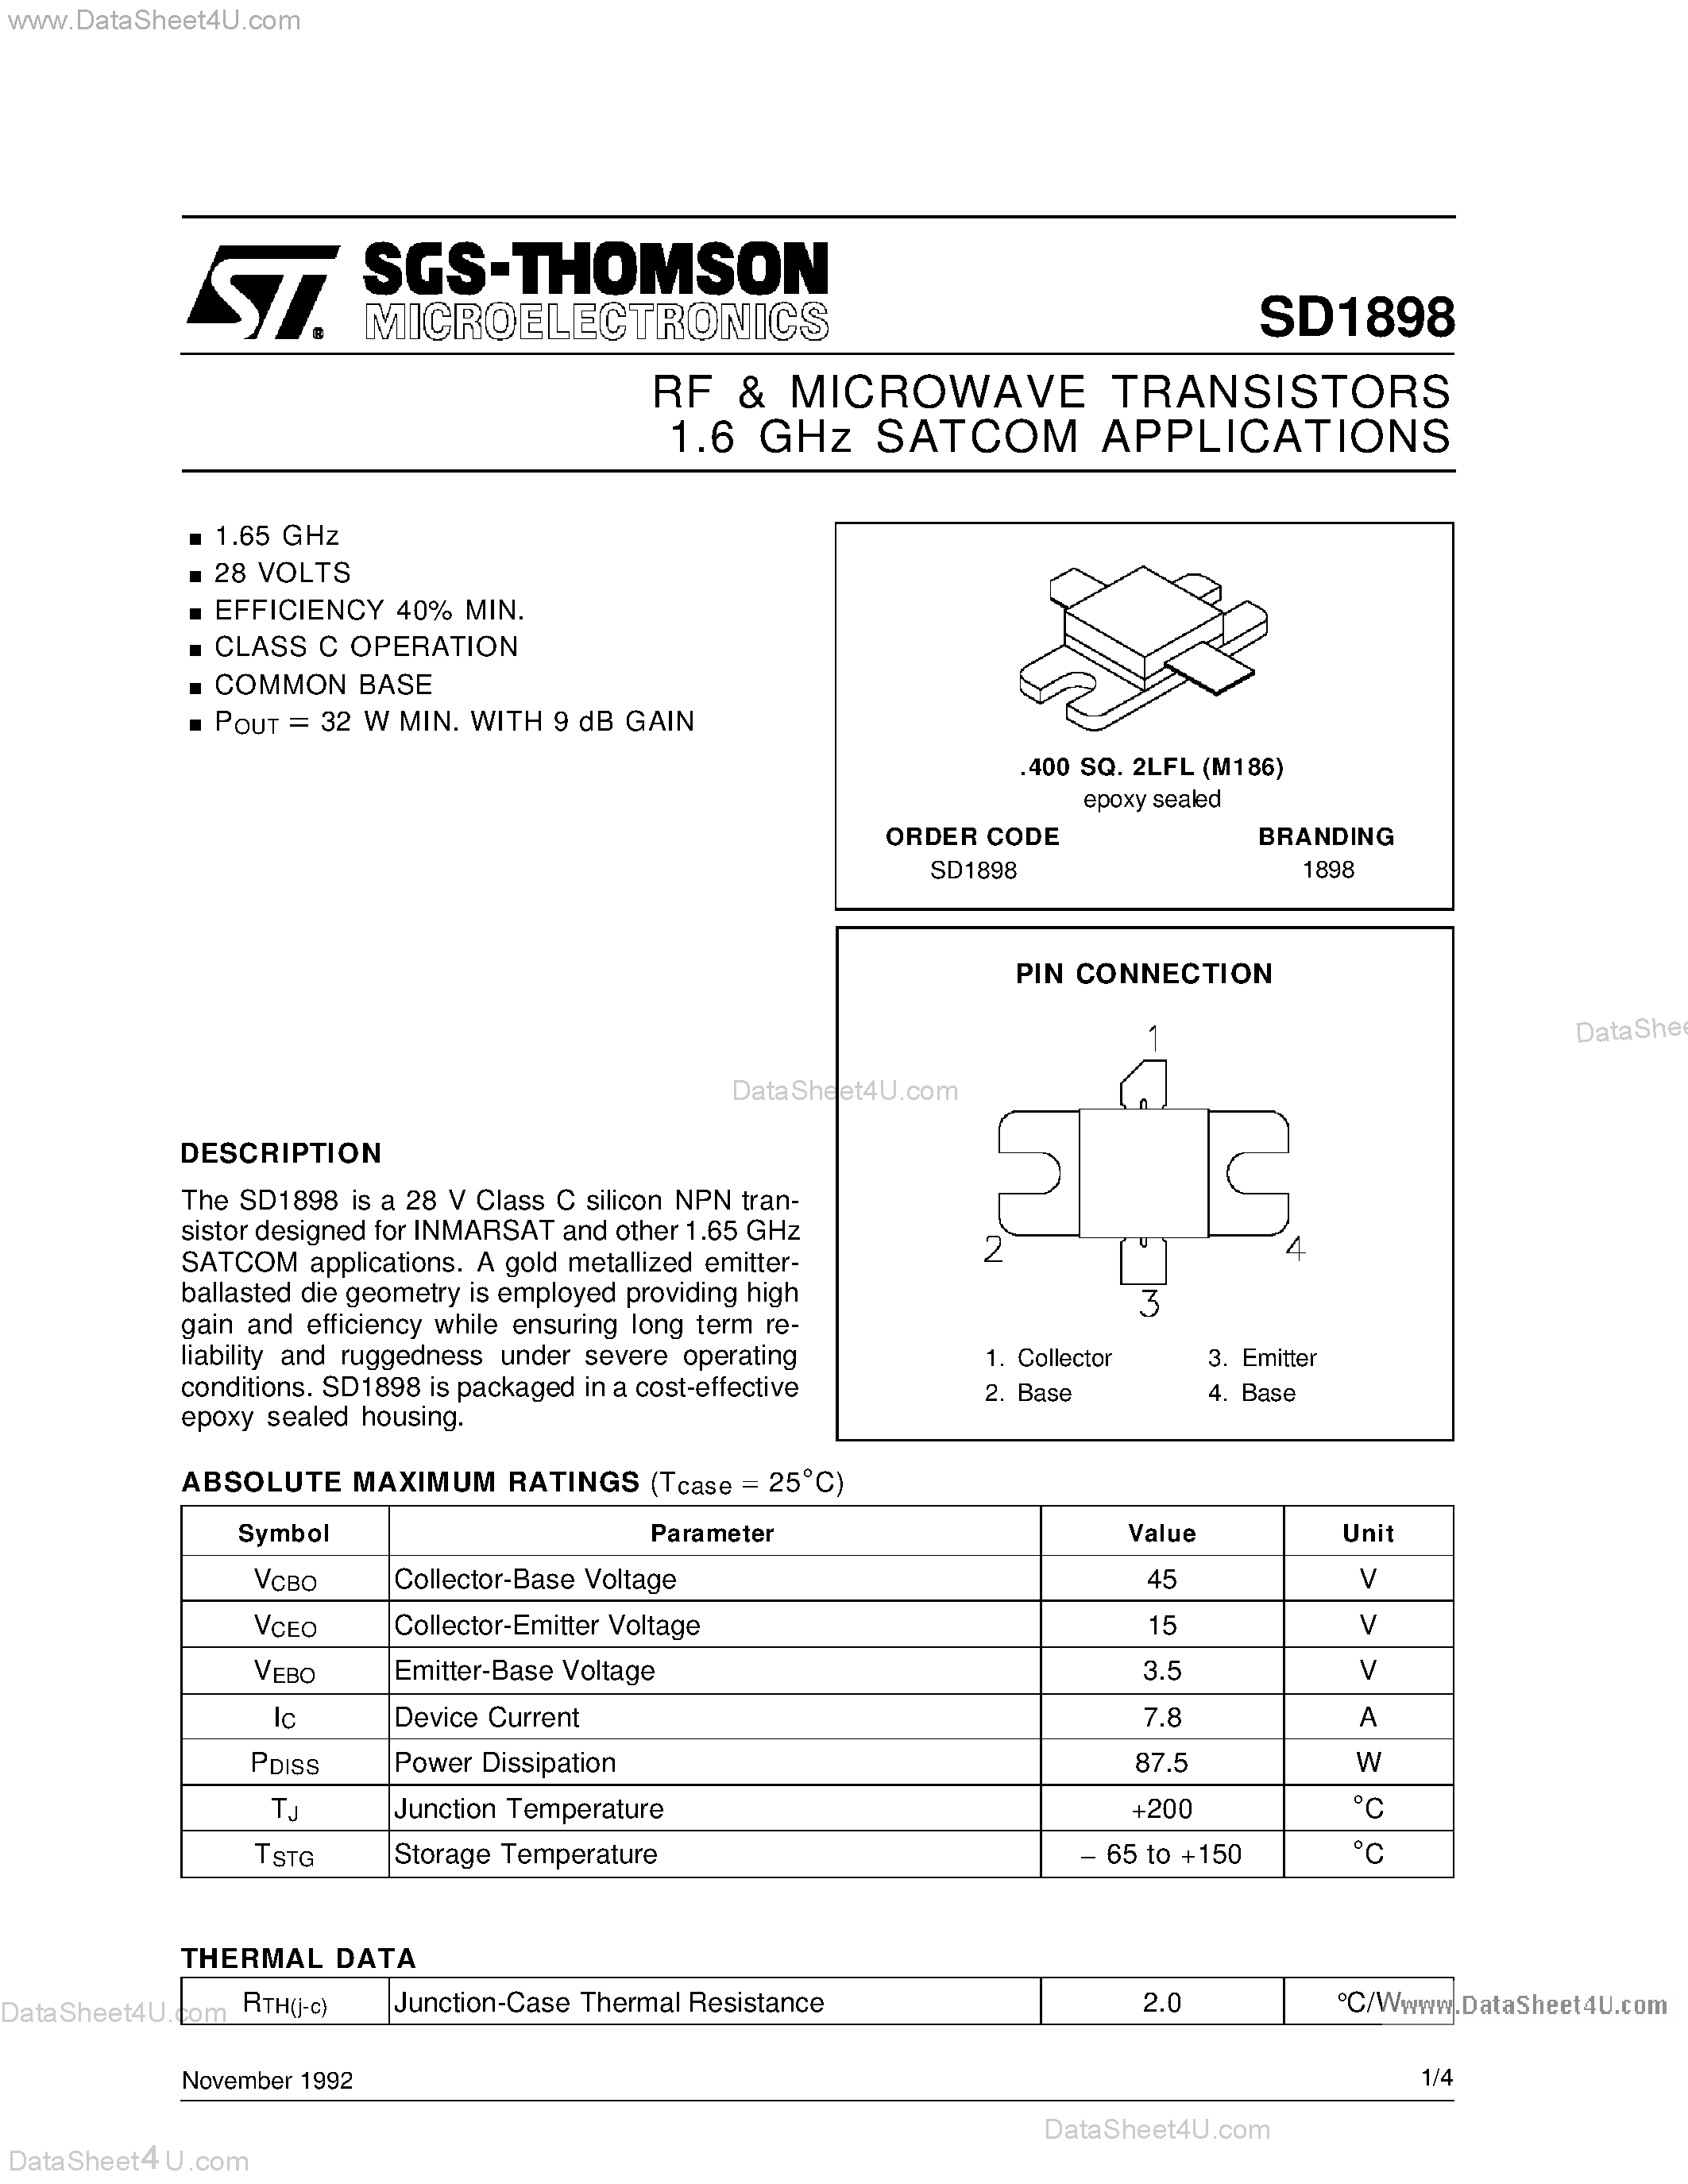 Даташит SD1898 - RF & MICROWAVE TRANSISTORS 1.6 GHz SATCOM APPLICATIONS страница 1